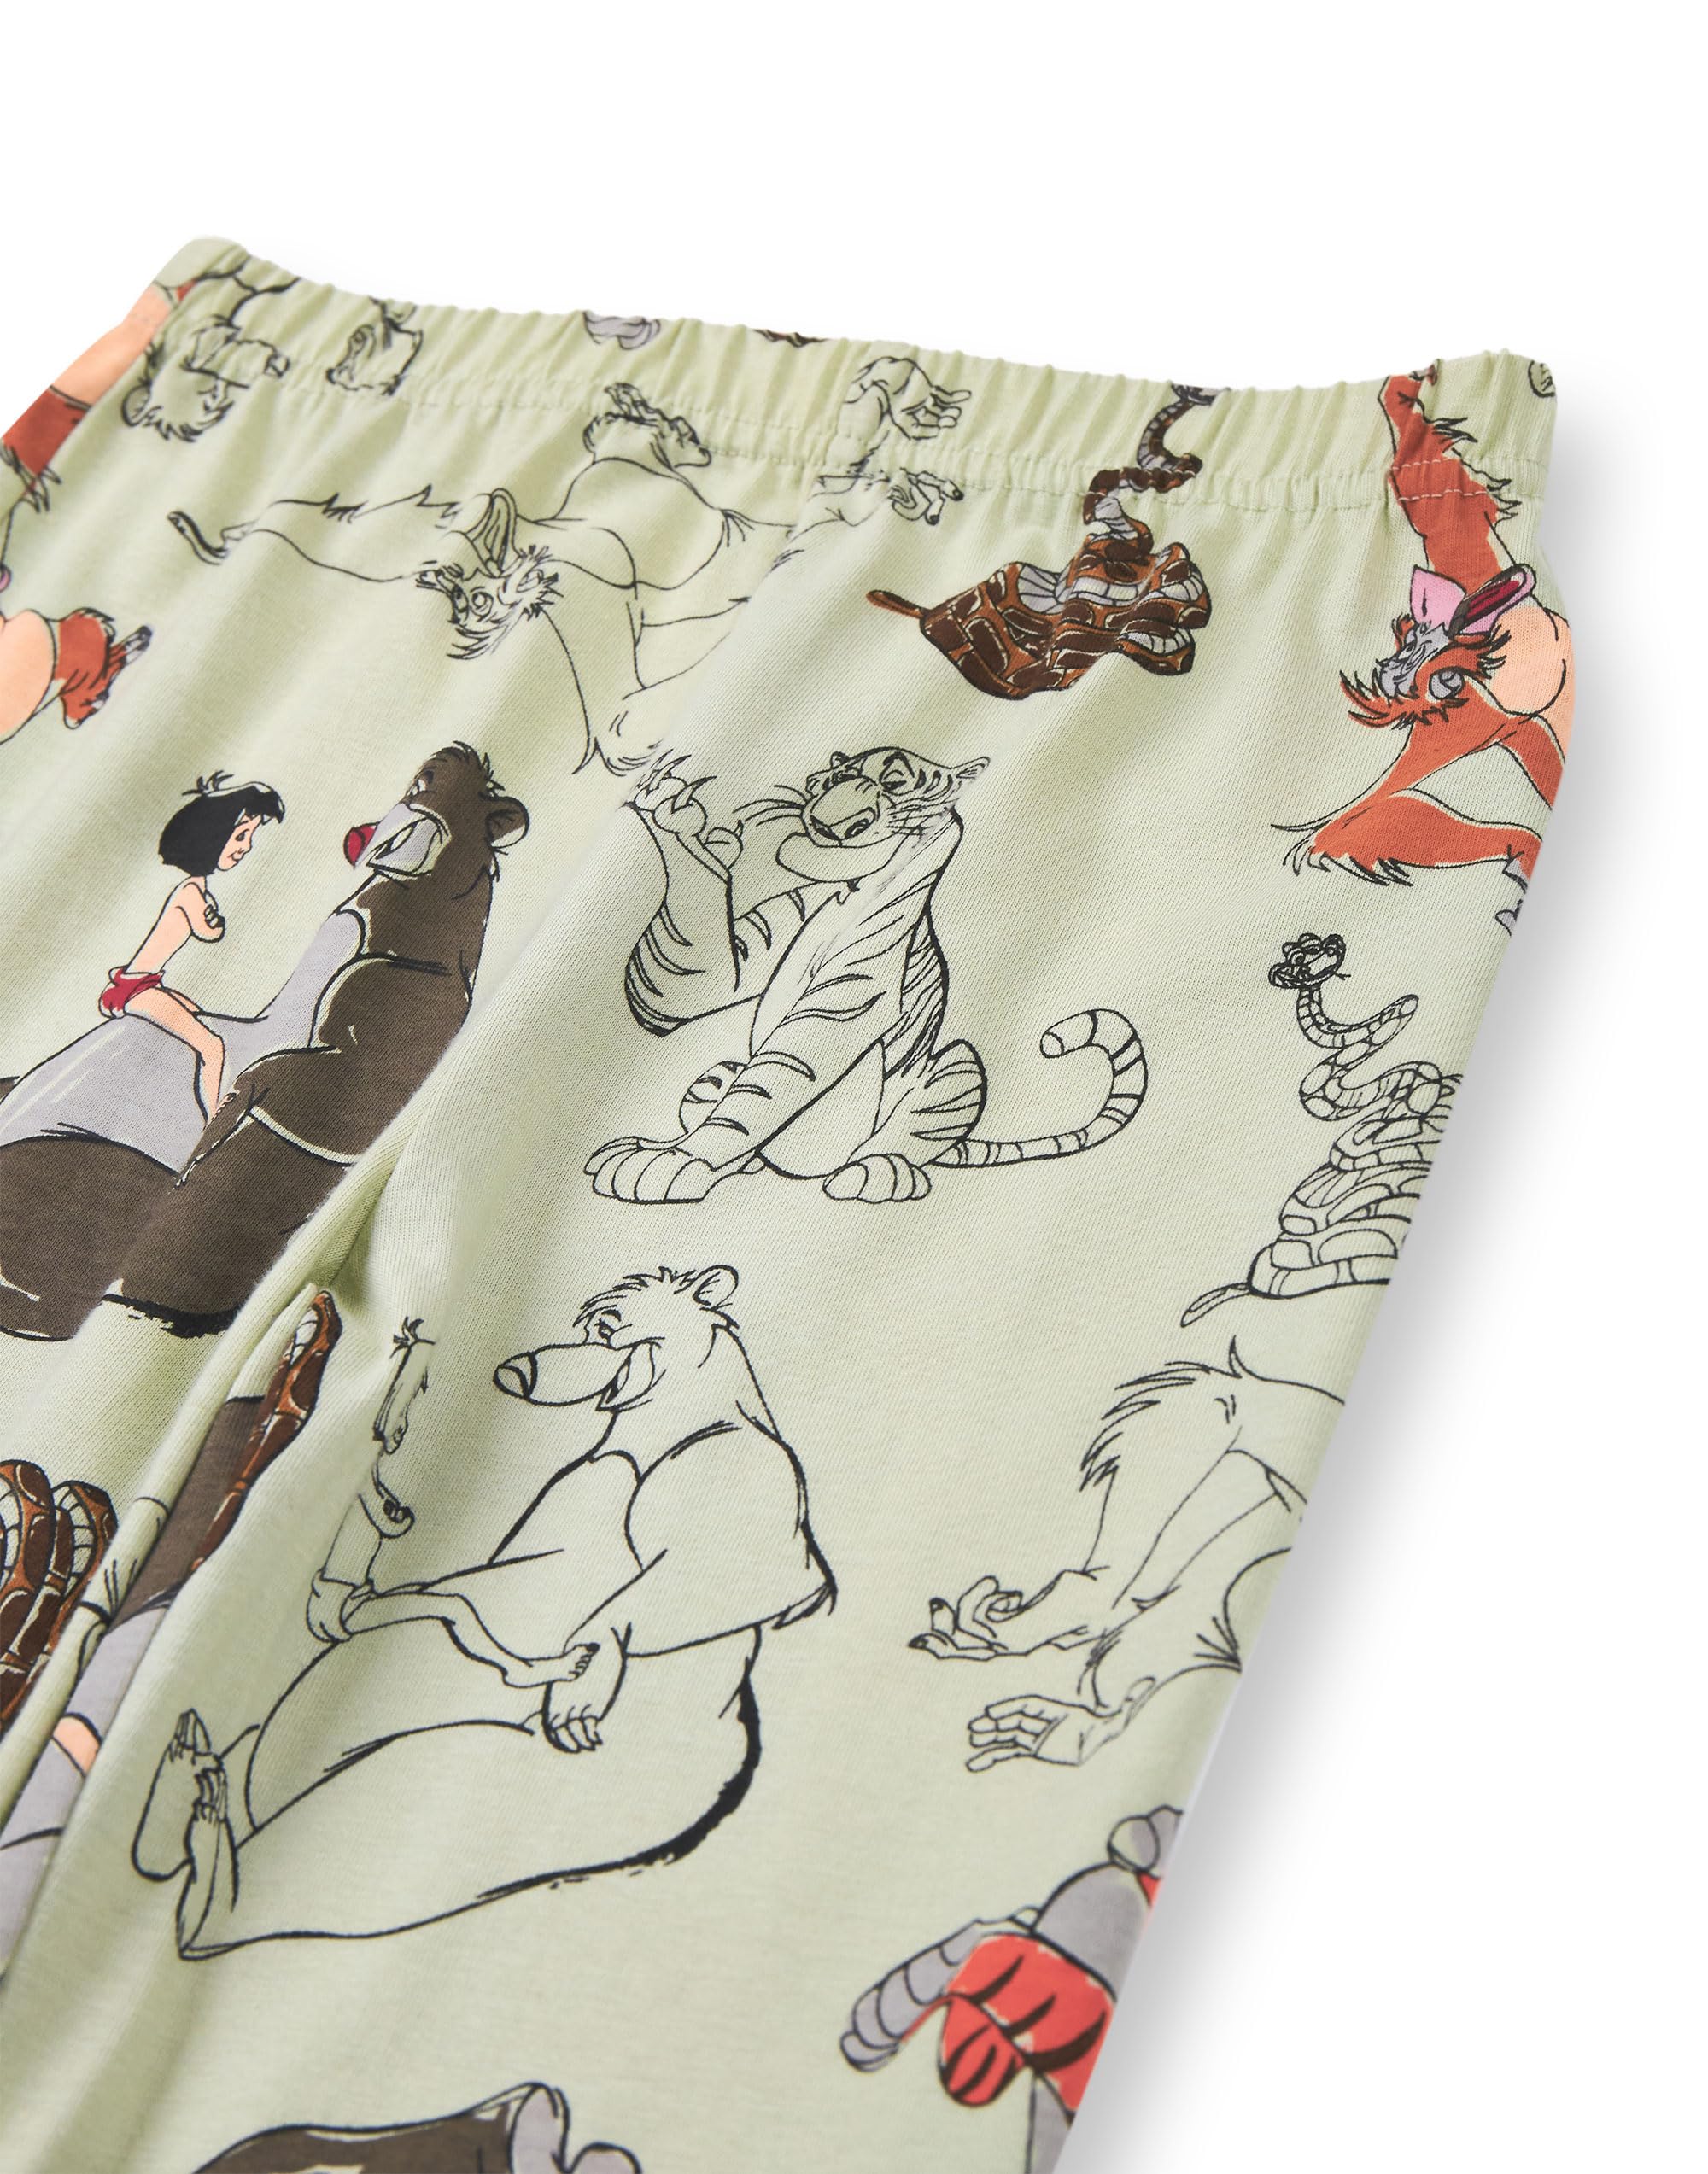 Disney The Jungle Book Boys Pyjama Set | Kids Long Sleeve Long Leg Graphic PJs in Green | Mowgli Baloo Shere Khan King Louie